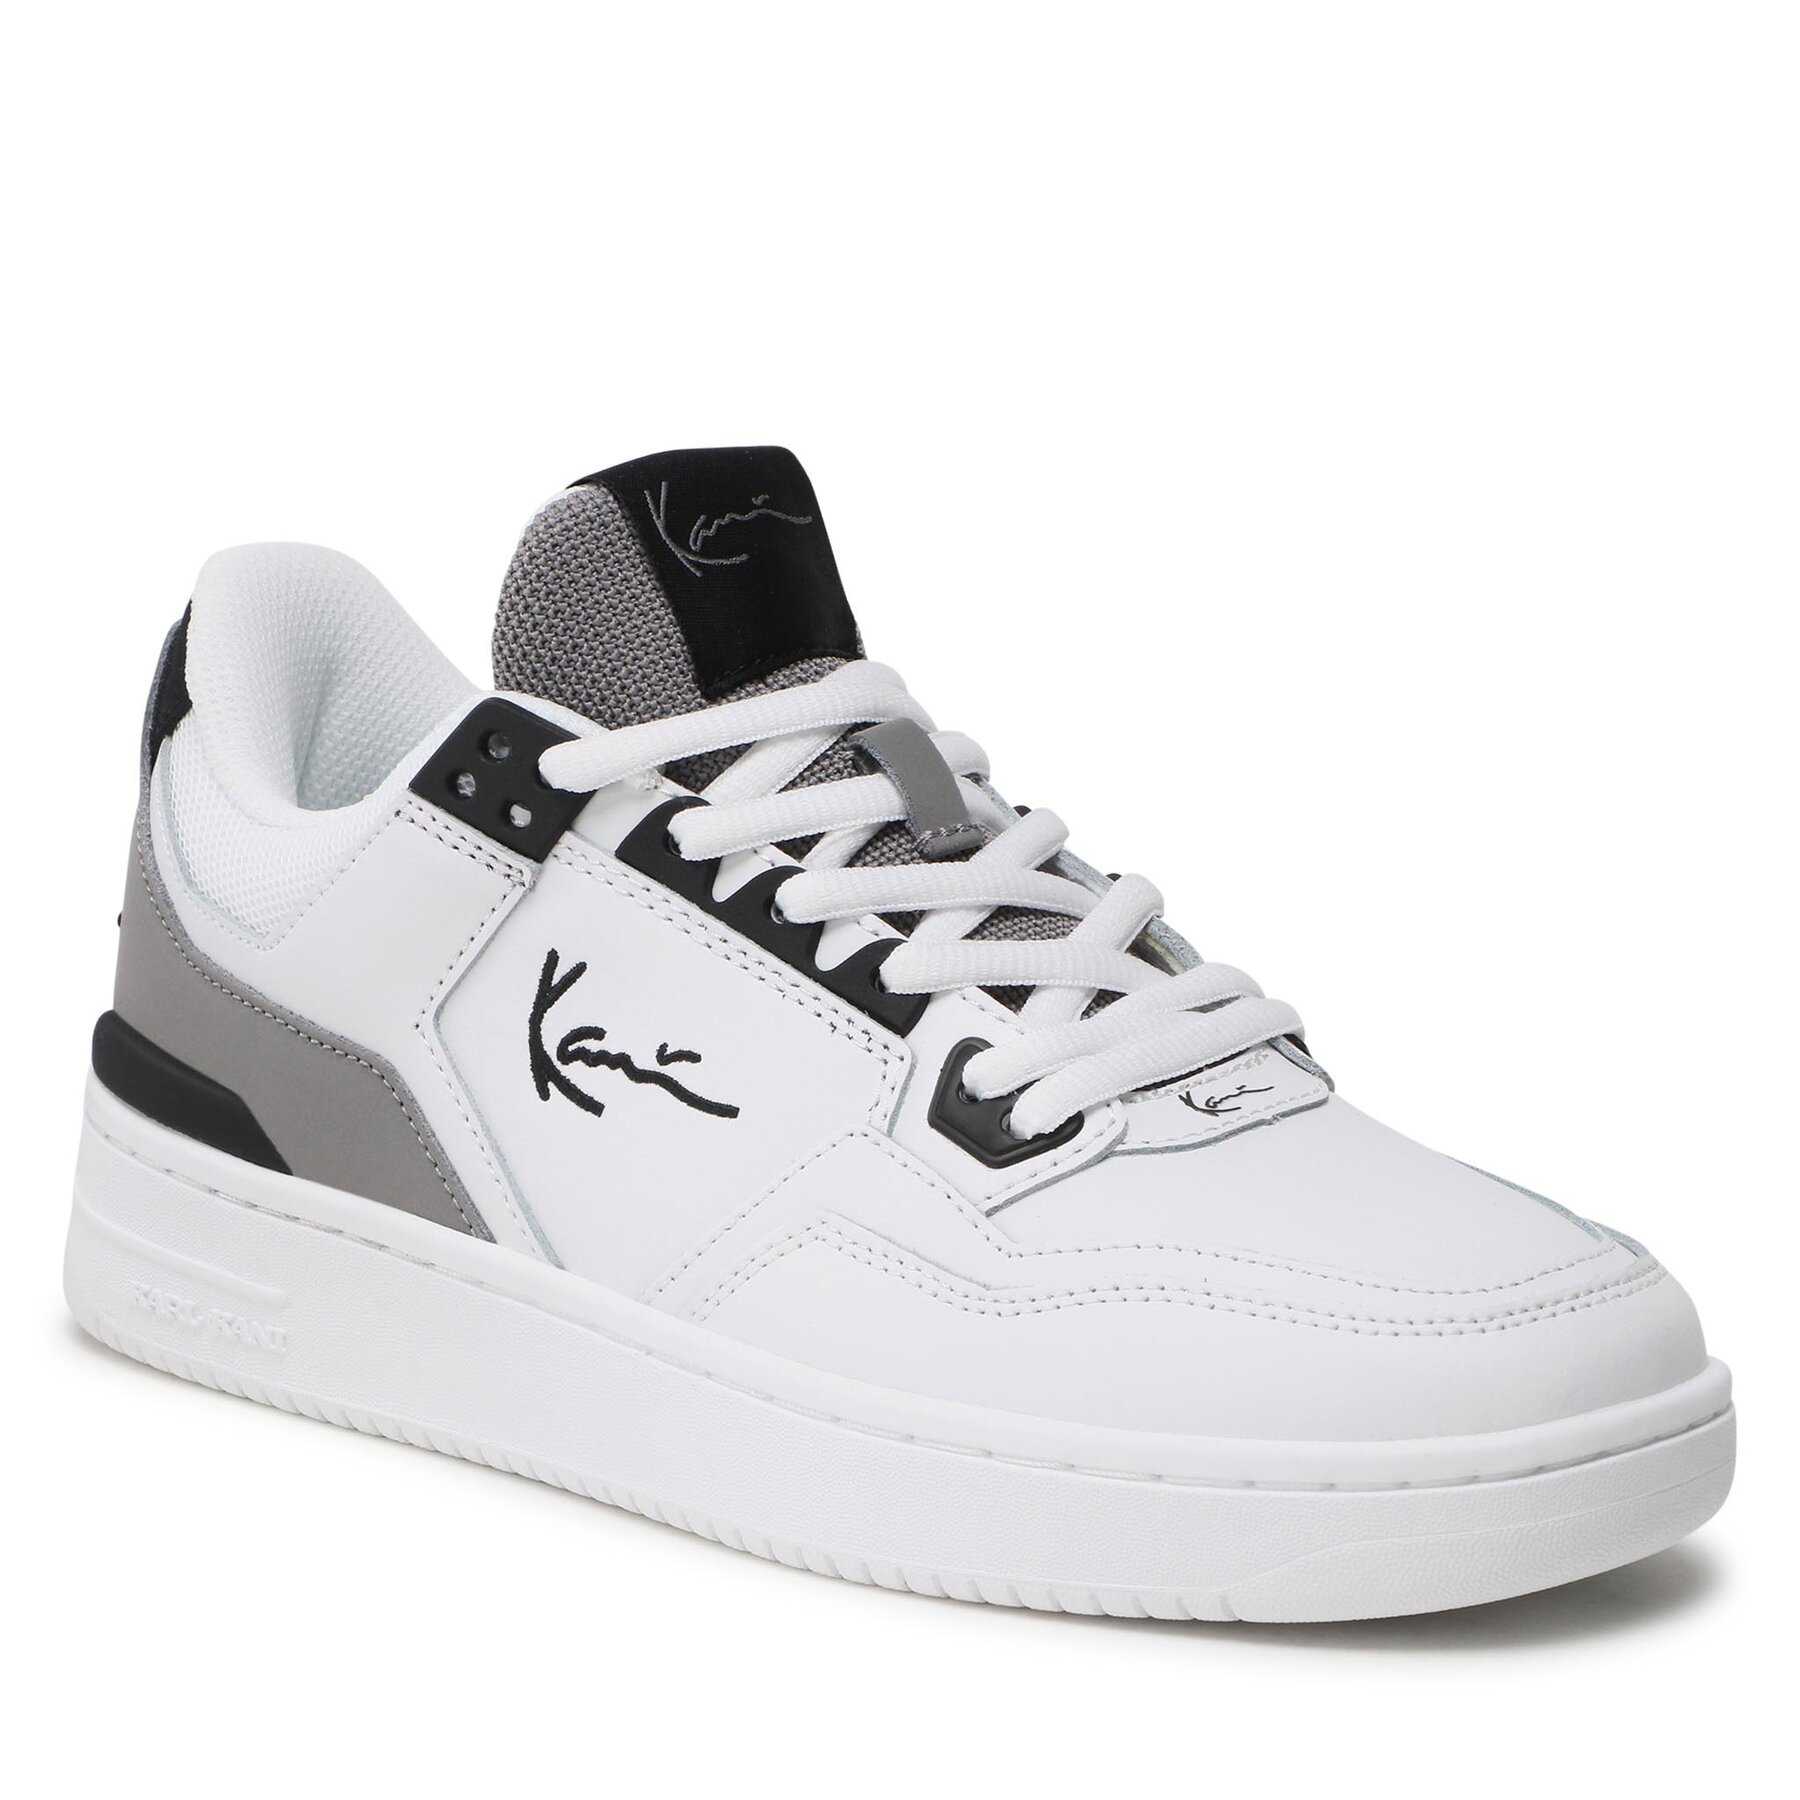 Sneakers Karl Kani 89 LXRY KKFWM000185 WHITE/GREY/BLACK von Karl Kani